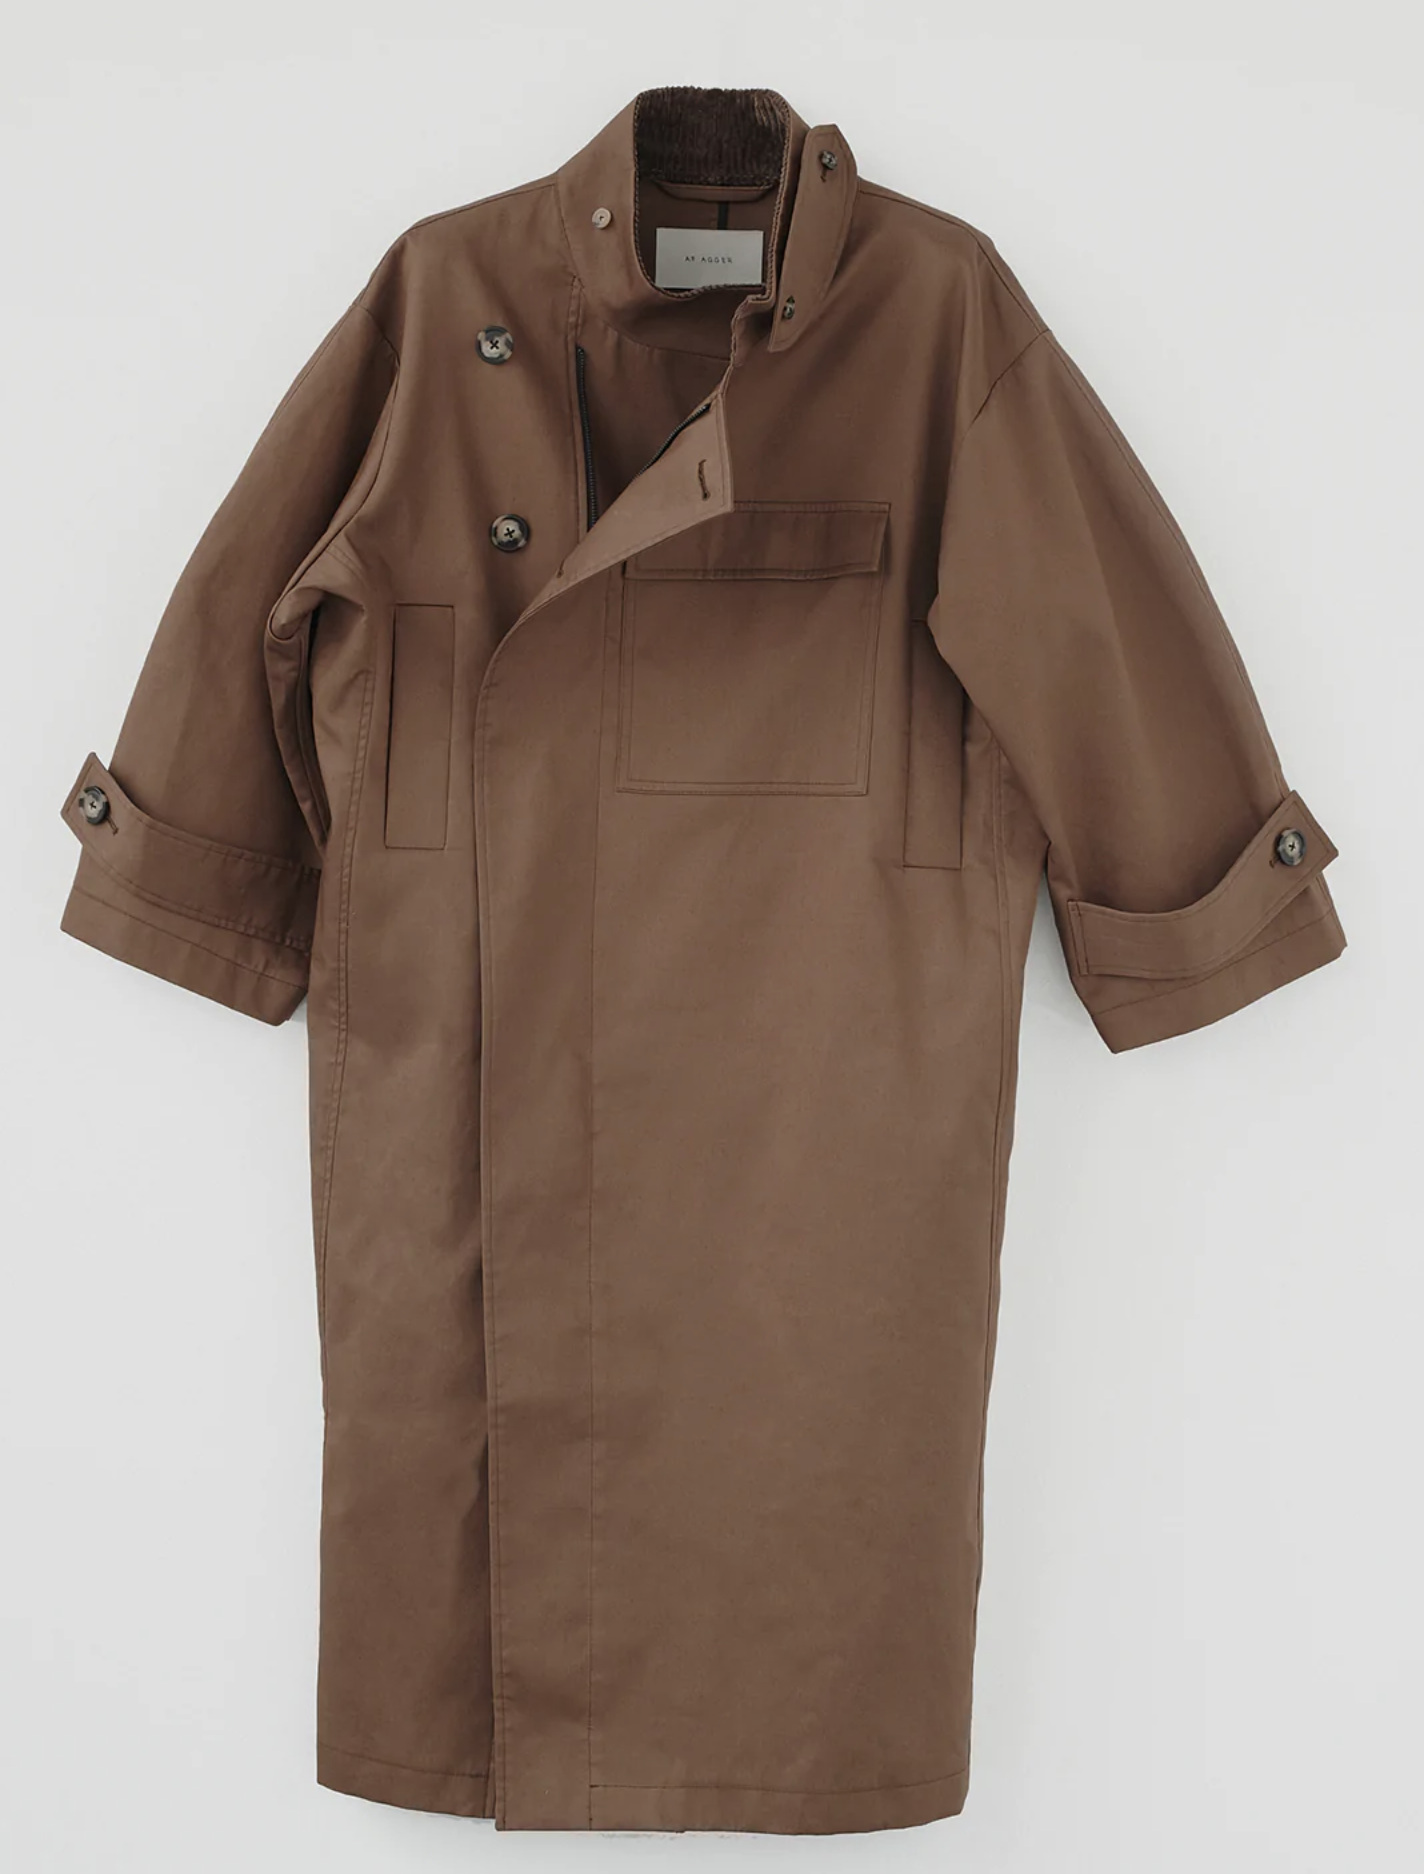 Water resistant coat brown size 1